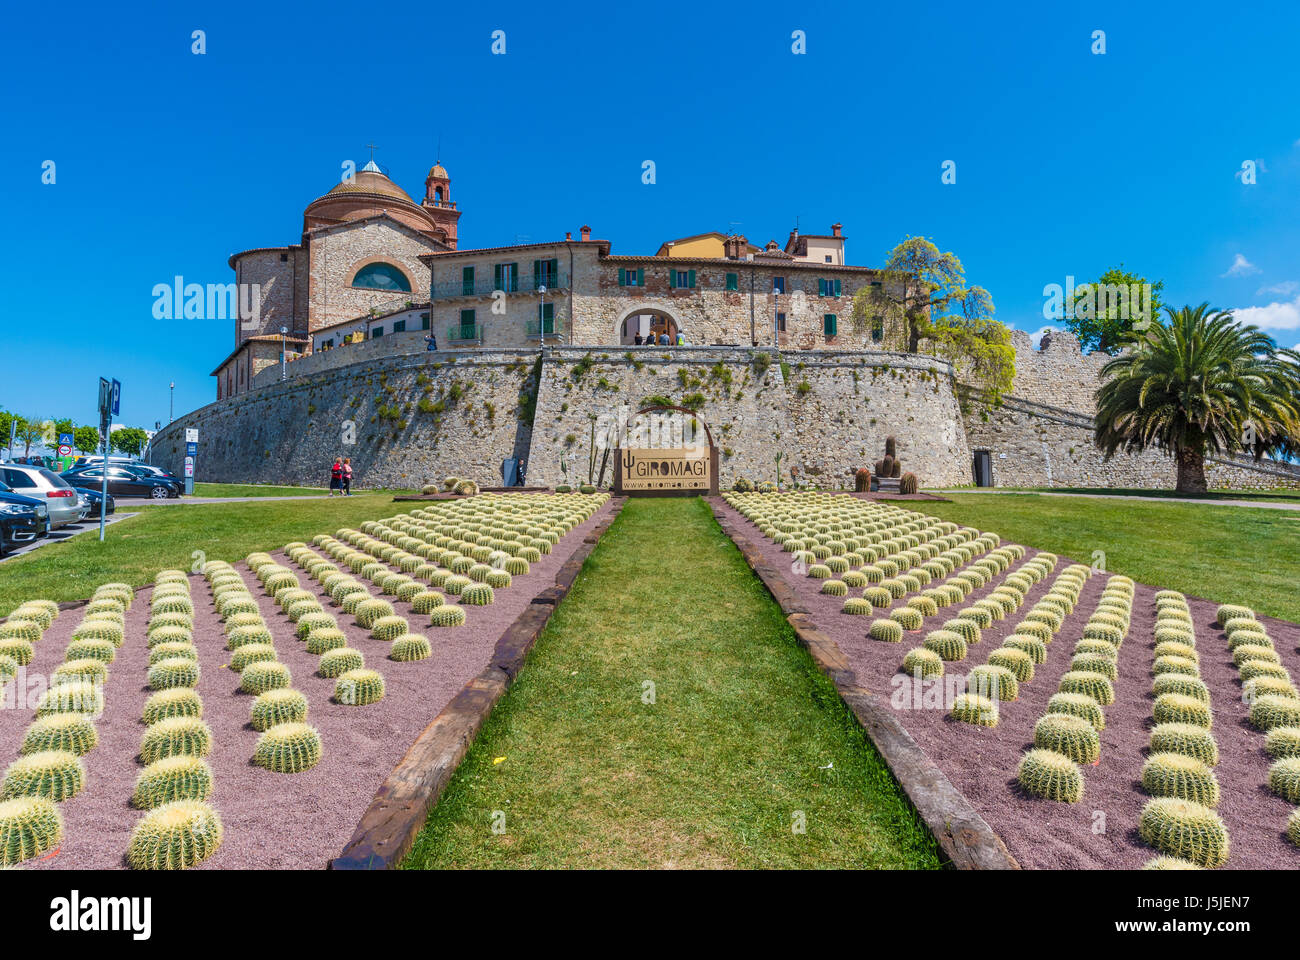 Castiglione Del Lago, Italy - A medieval town with a big castle in historic center, beside Trasimeno lake, Umbria region, central Italy Stock Photo